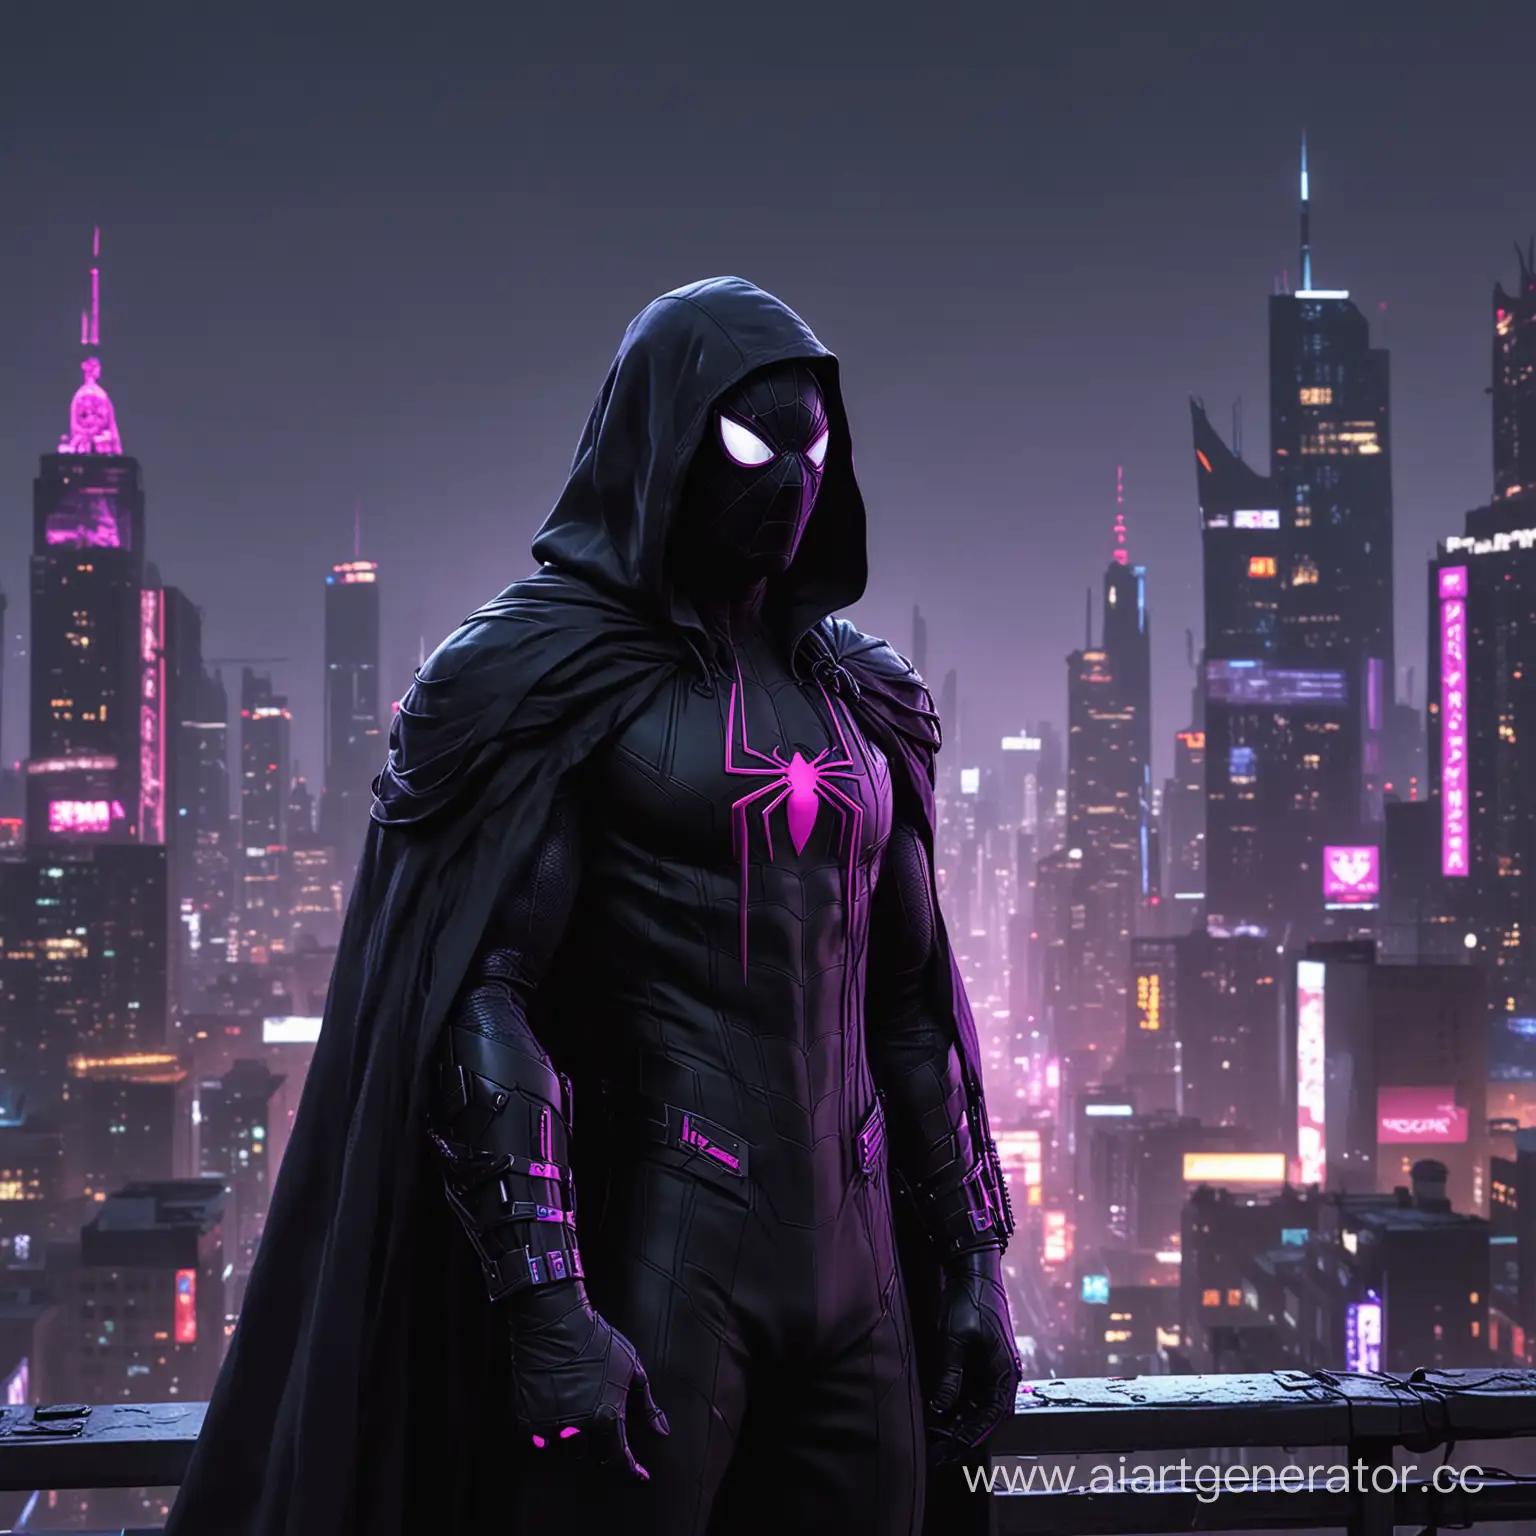 Cyberpunk-SpiderMan-in-Noir-Suit-Surveys-Futuristic-Cityscape